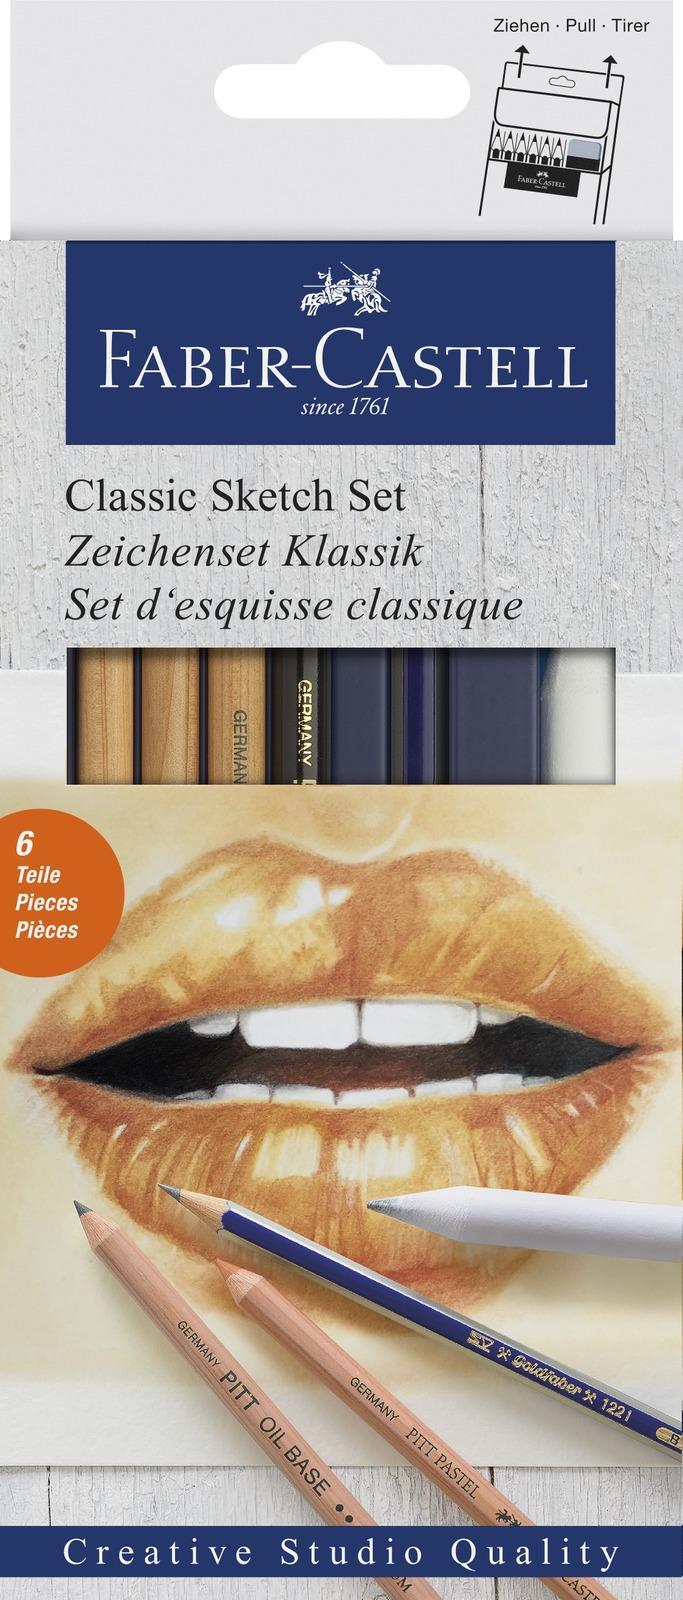 Faber-Castell: Classic Sketch Set